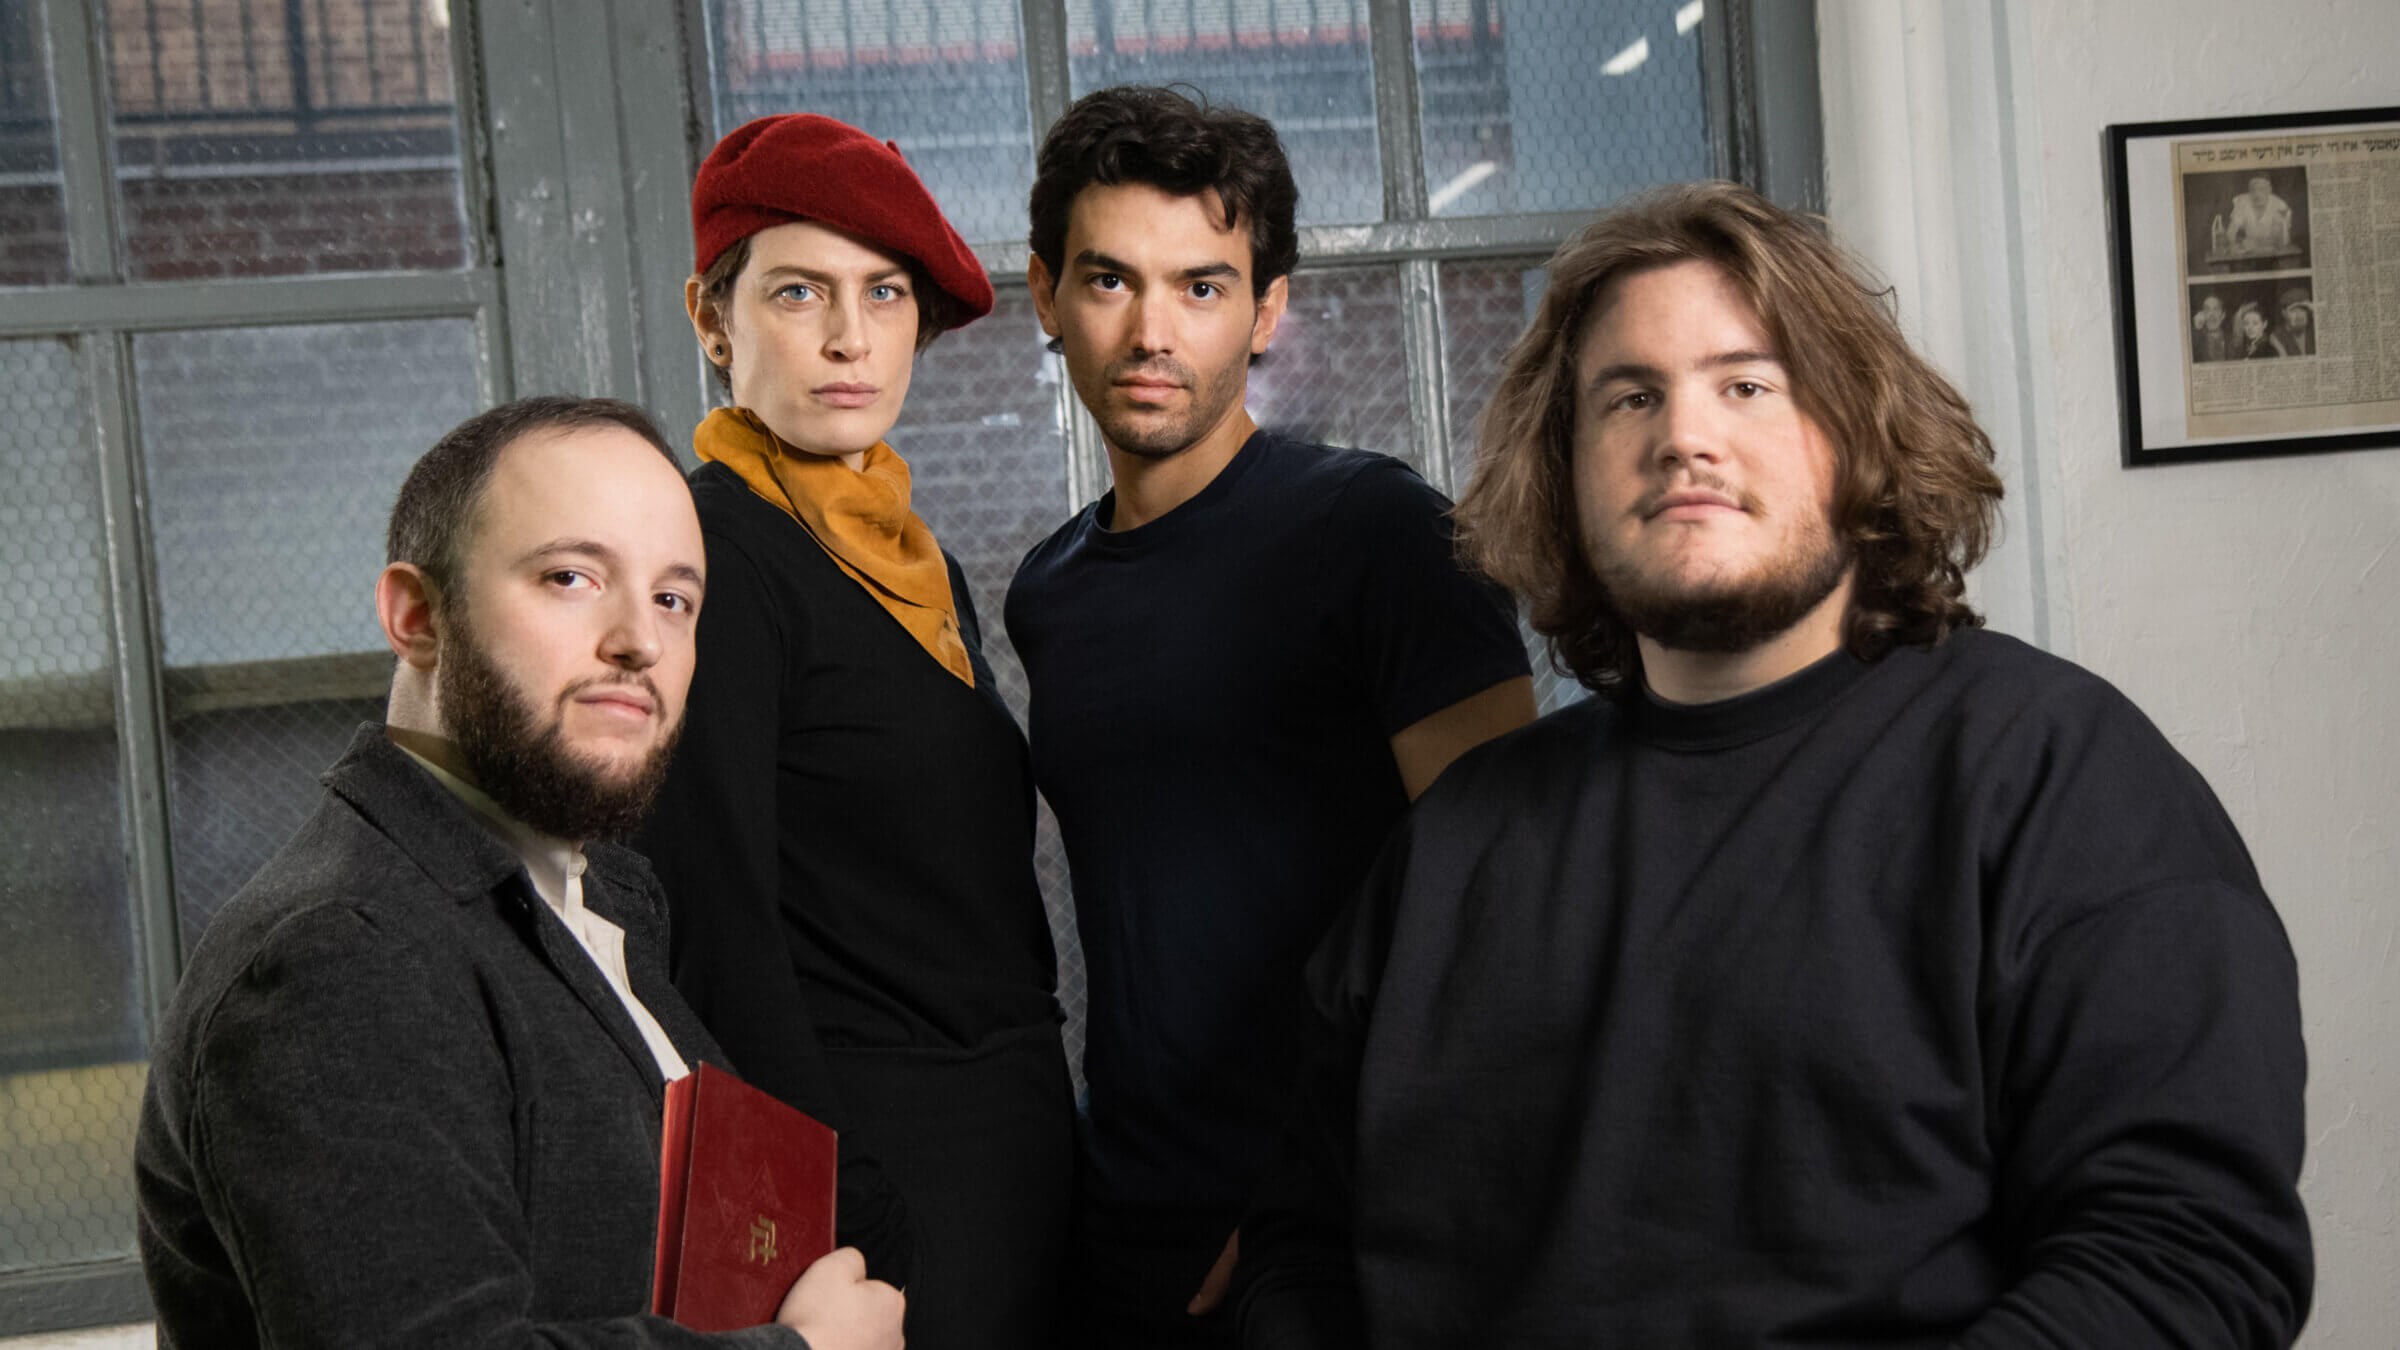 The cast of 'The Gospel According to Chaim' from left to right: Mikhl Yashinsky, Melissa Weisz,  Sruli Rosenberg and Joshua Horowitz